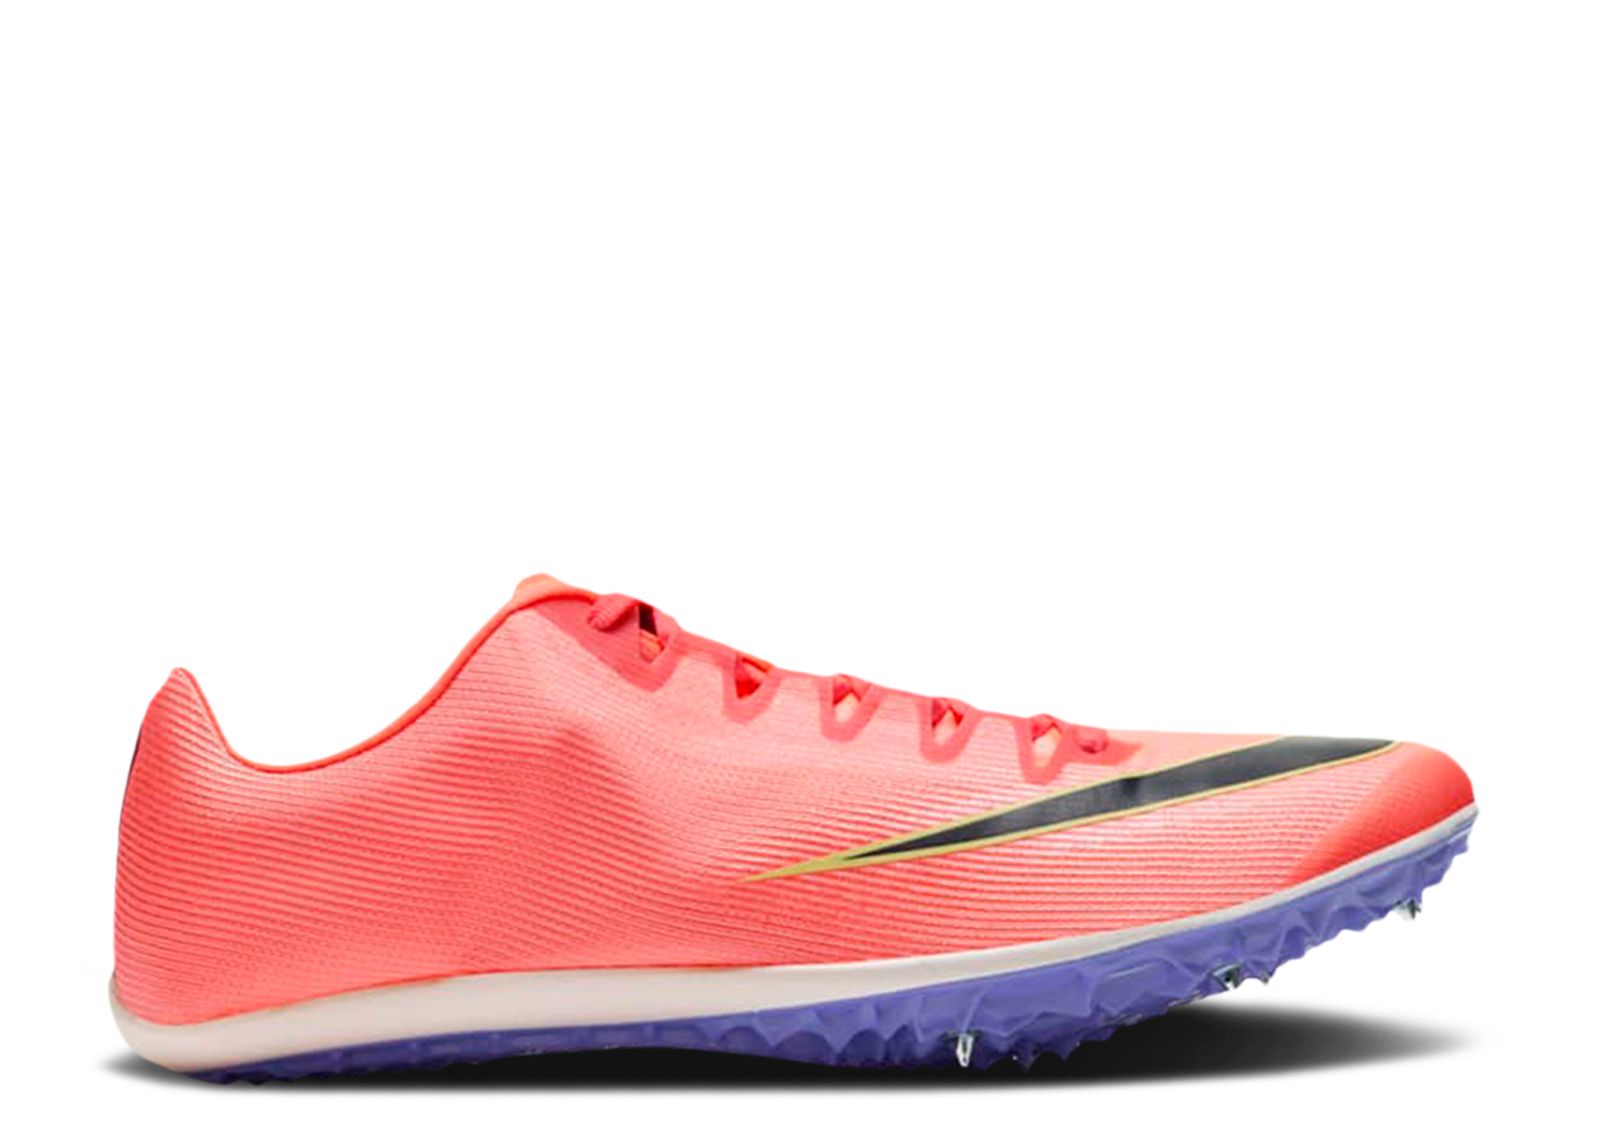 Zoom 400 'Bright Mango' - Nike - AA1205 800 - bright mango/atomic pink ...